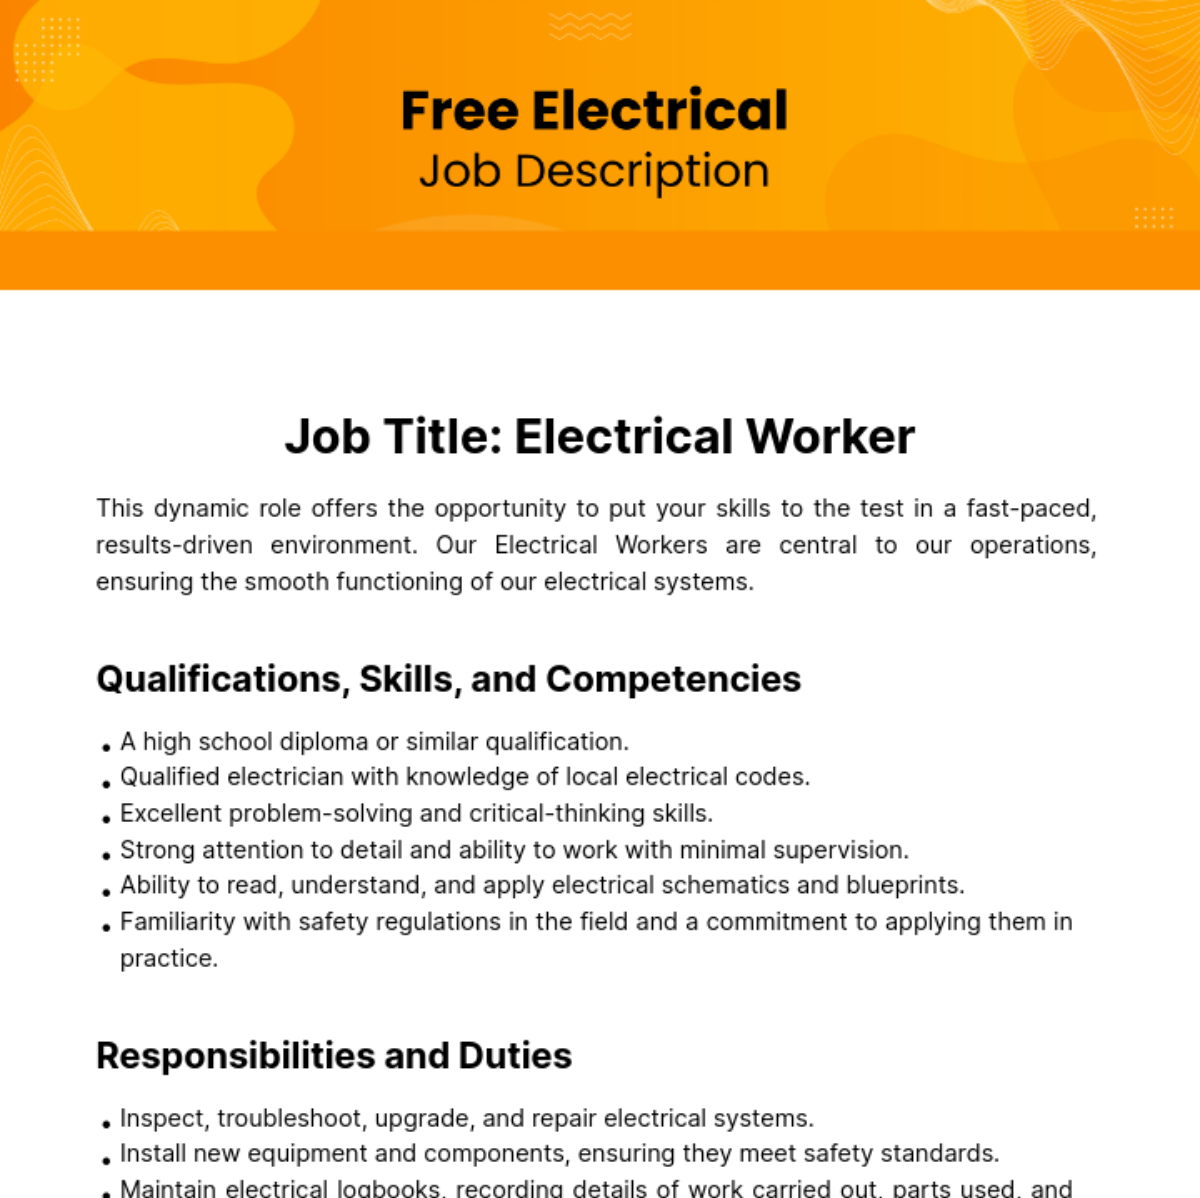 Free Electrical Job Description Template